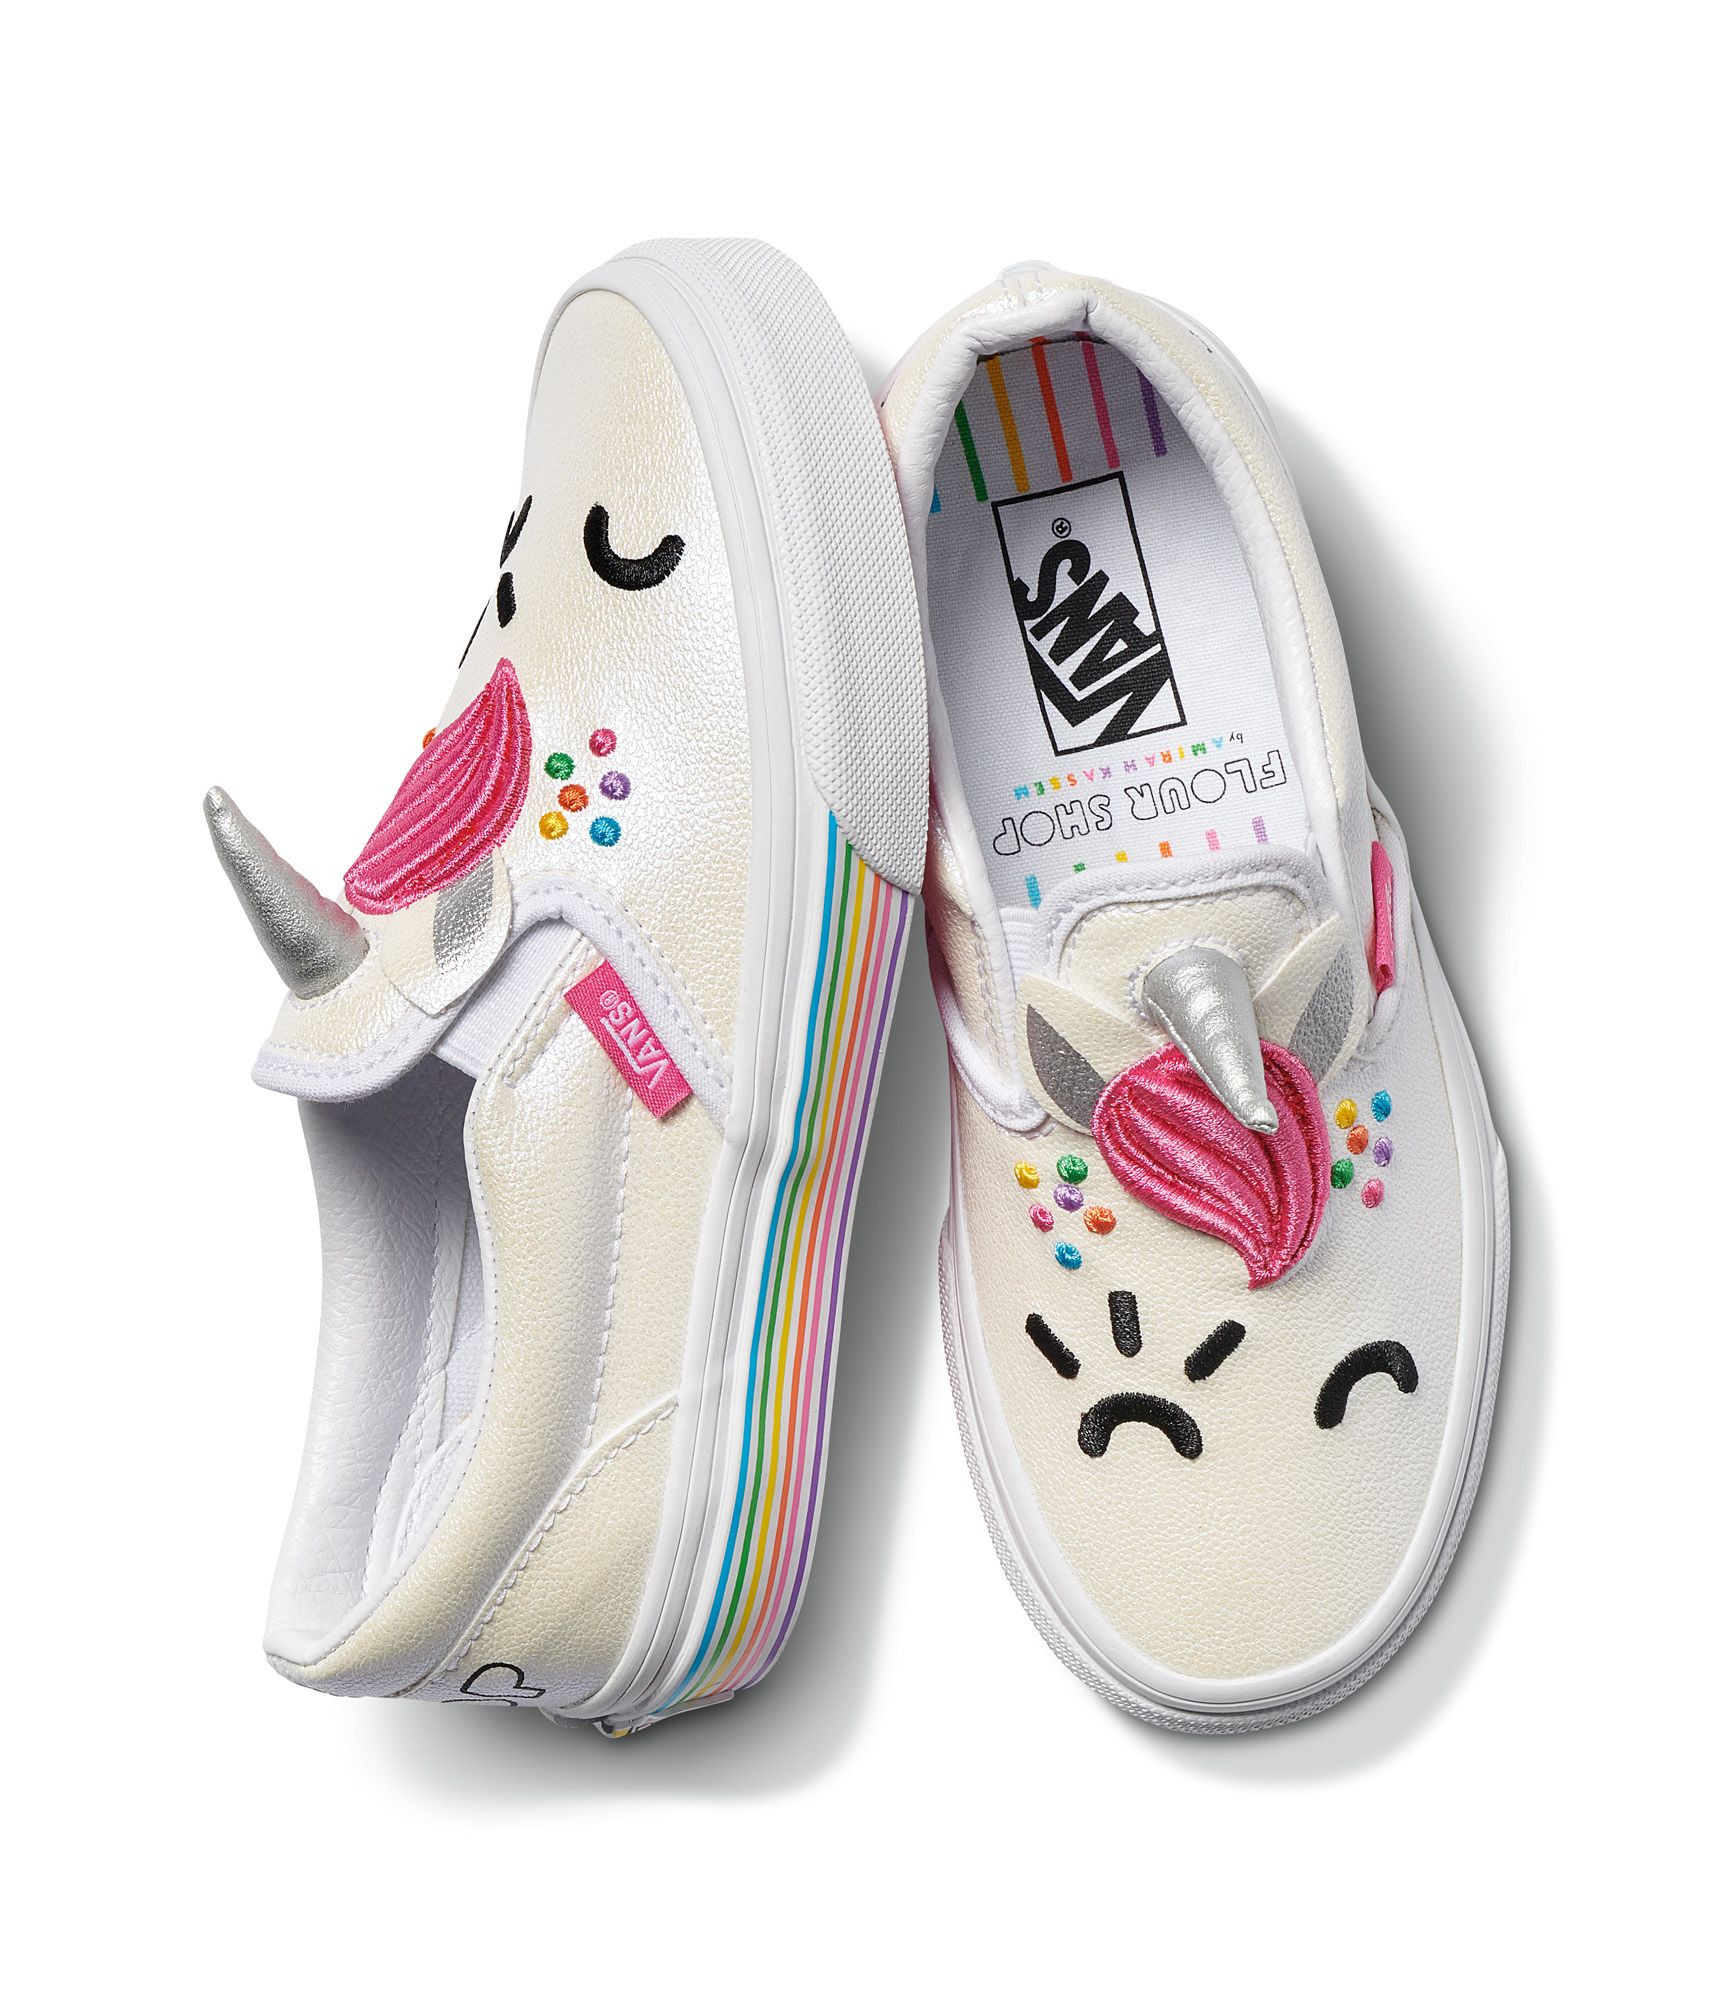 Las zapatillas Vans unicornio de tus sueños - SneakerS unicornio